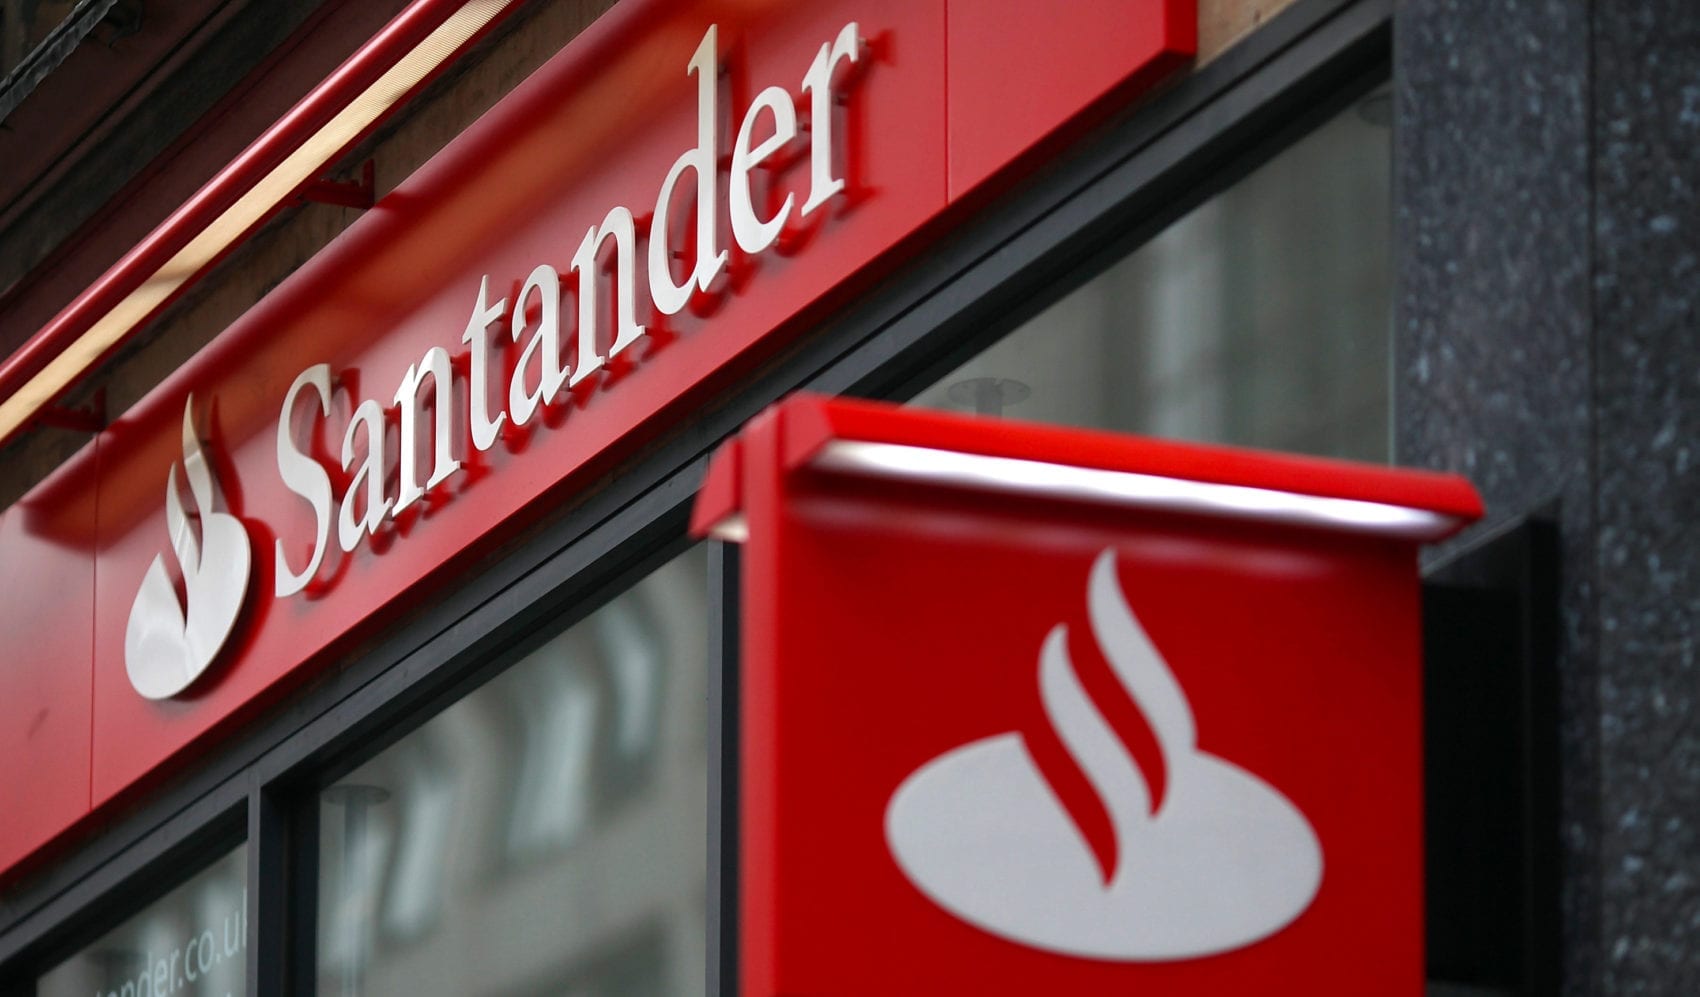 Previdência privada Santander vale a pena? Descubra!